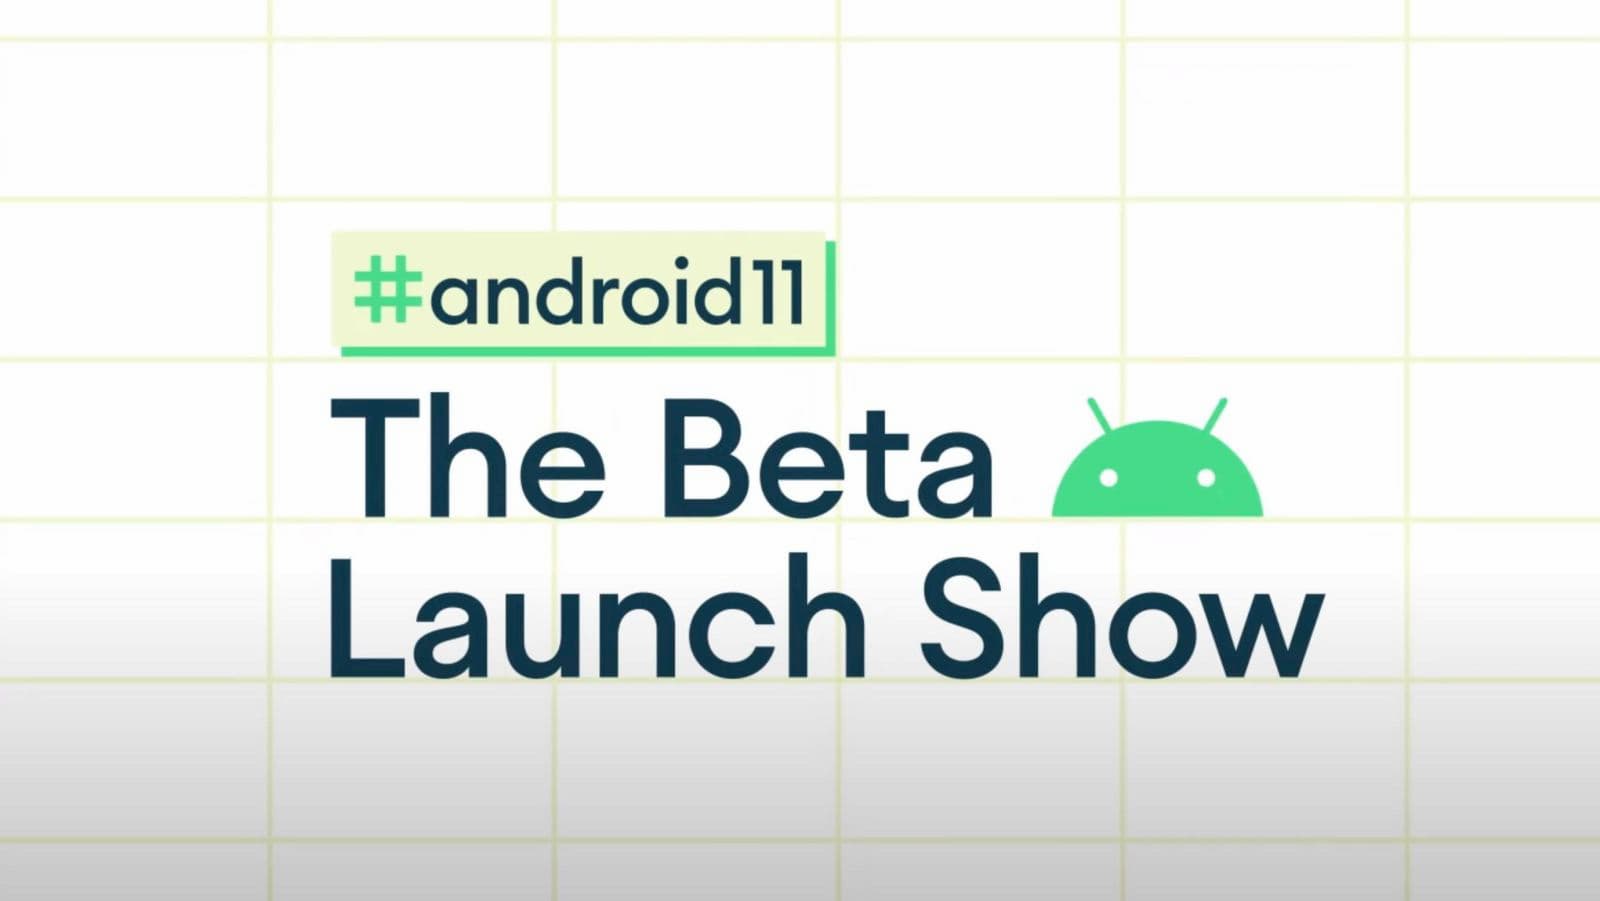 Capa promocional do evento do Android 11